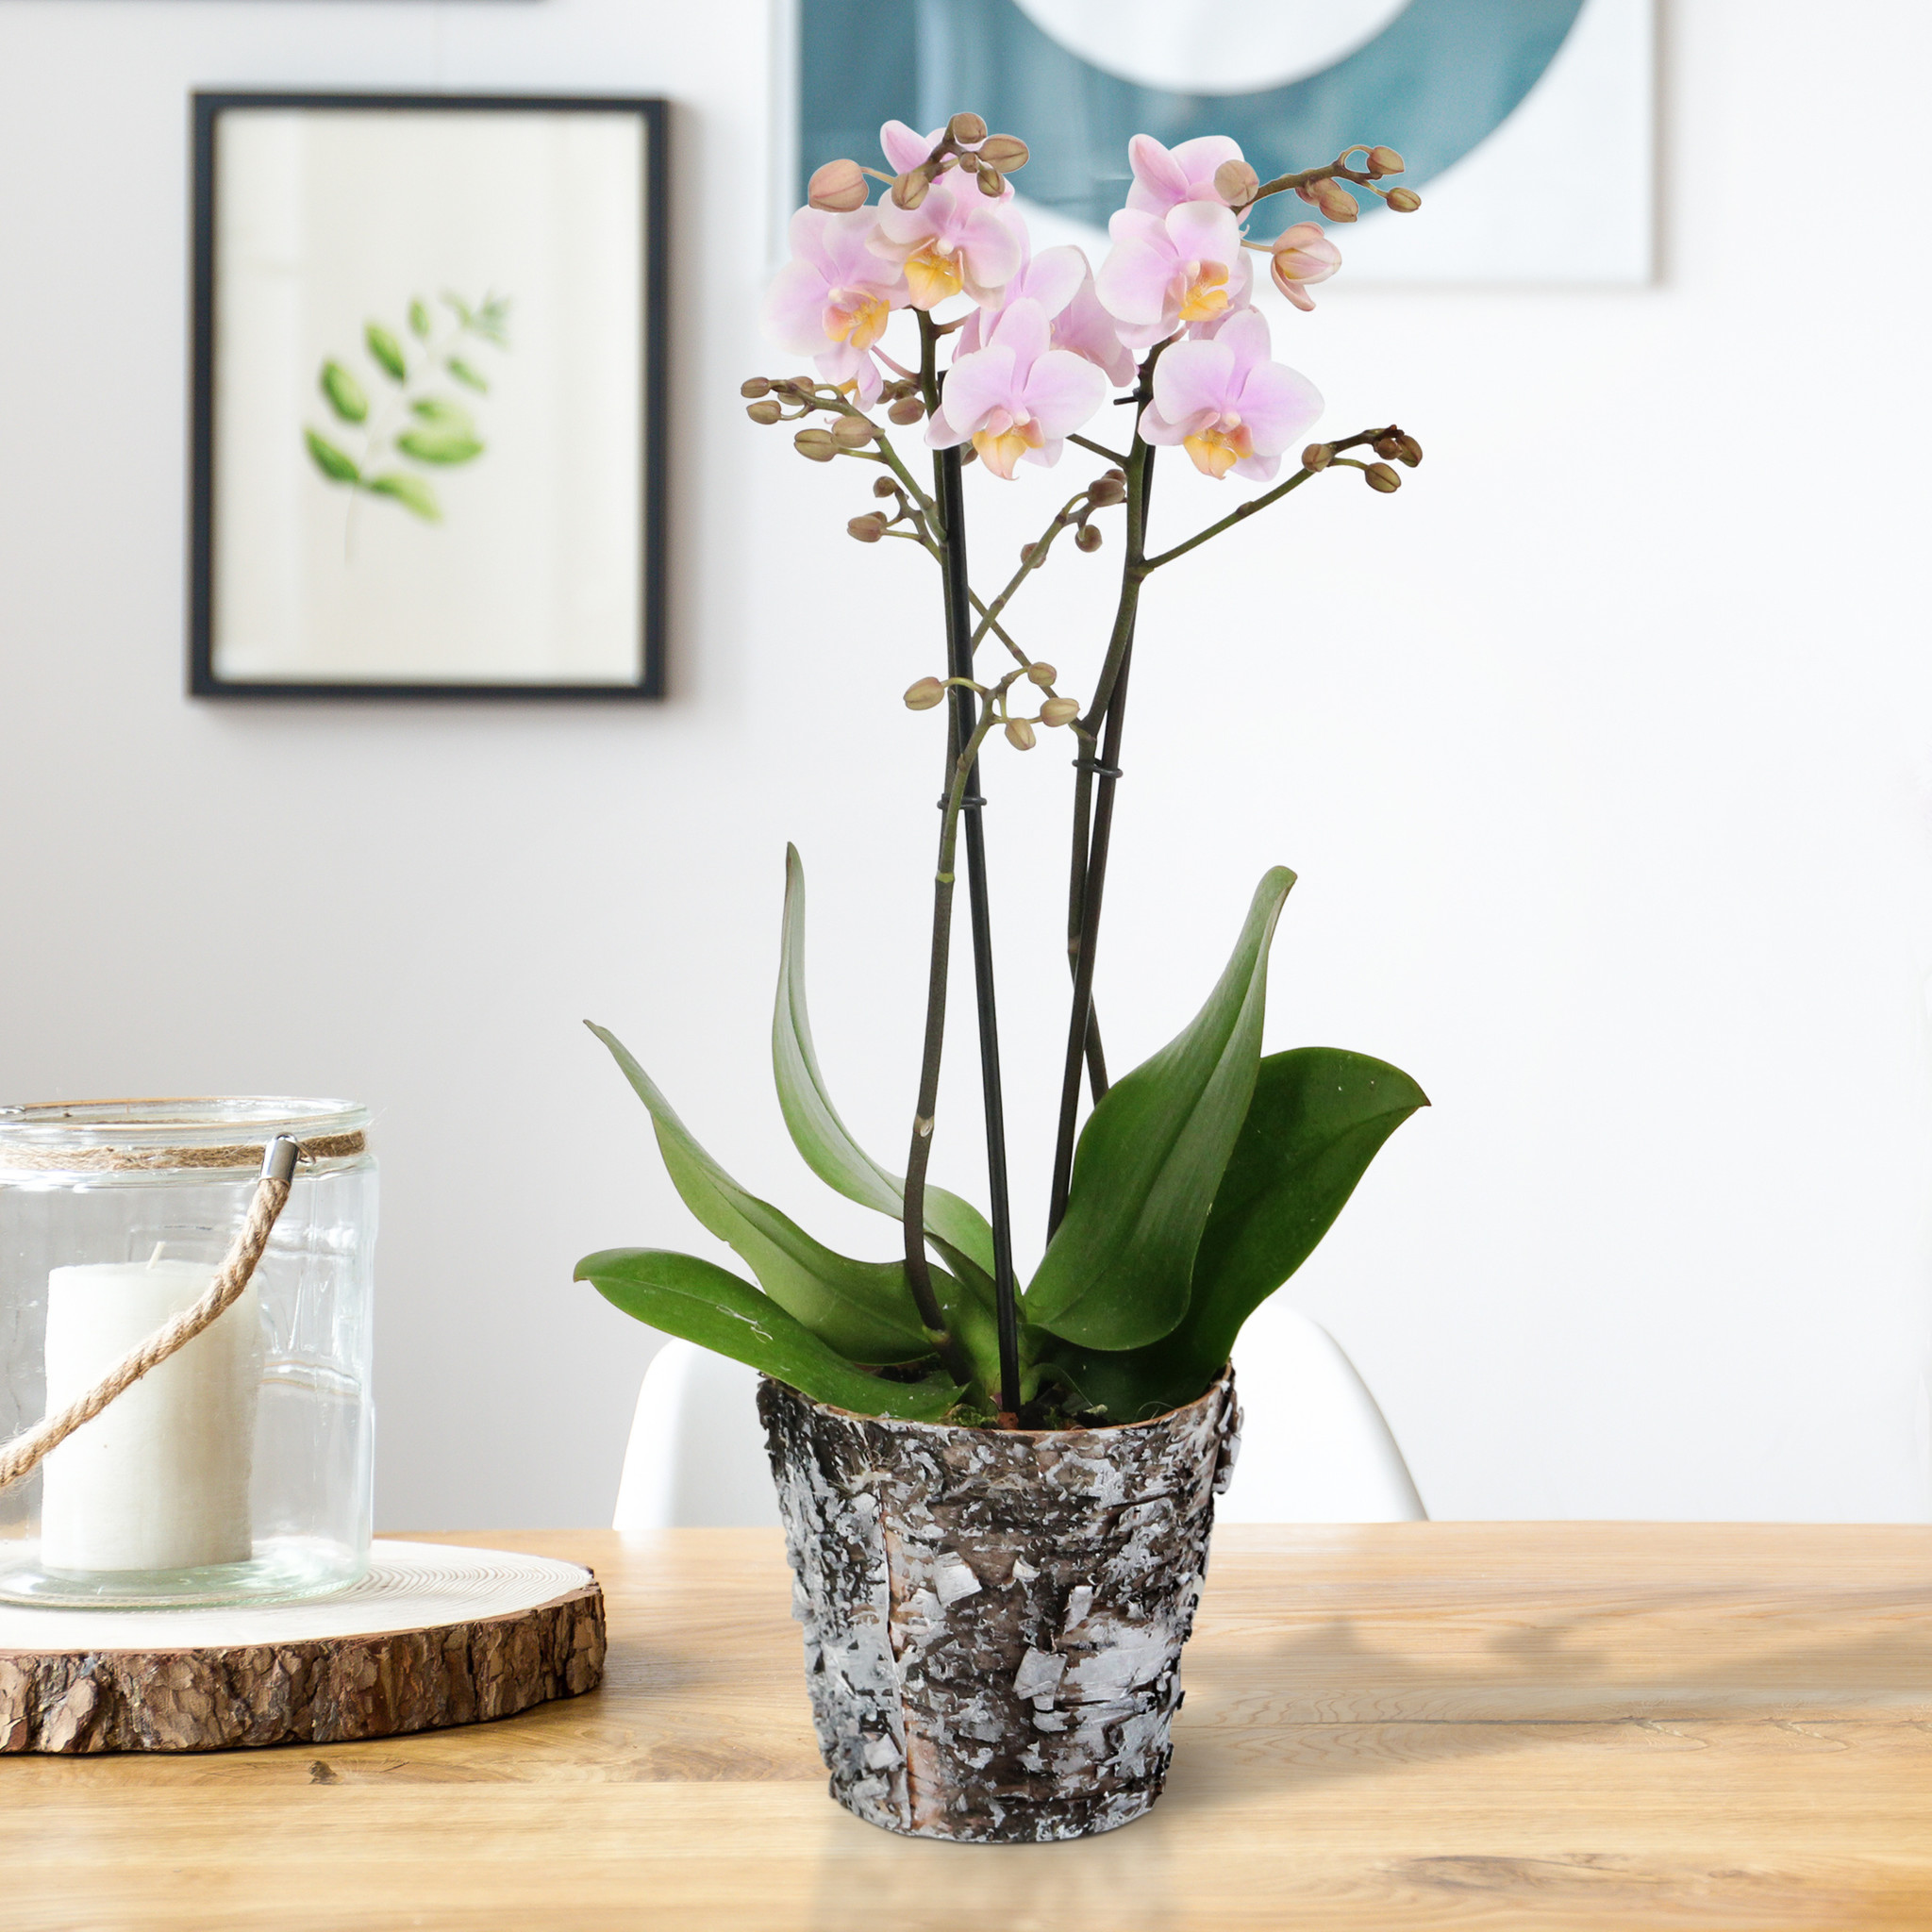 Amaglad met Wooden pot (Phalaenopsis Amaglad met Wooden pot - 12x45 cm)